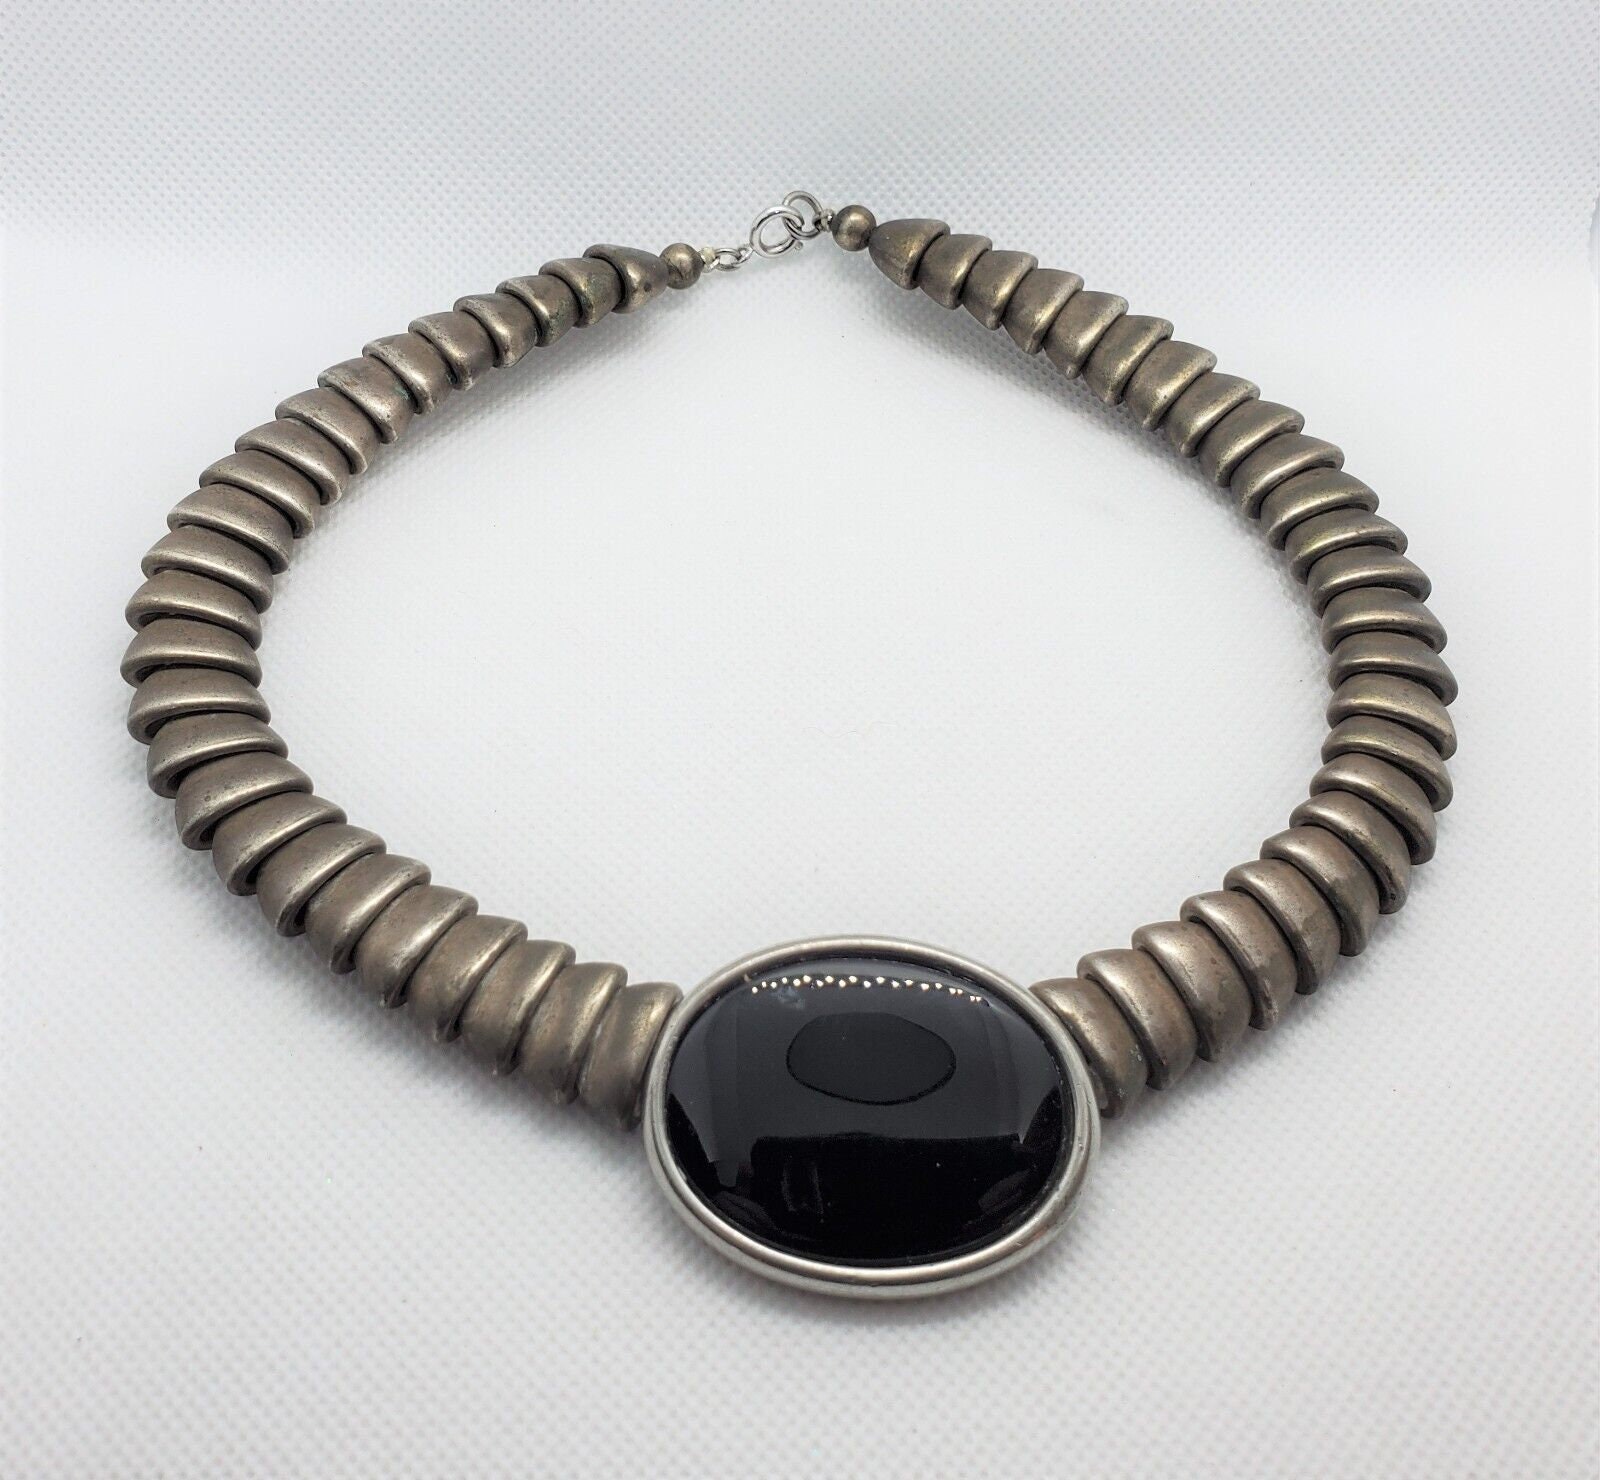 Ben-Amun Jewelry Hemingway Lockets Bracelet